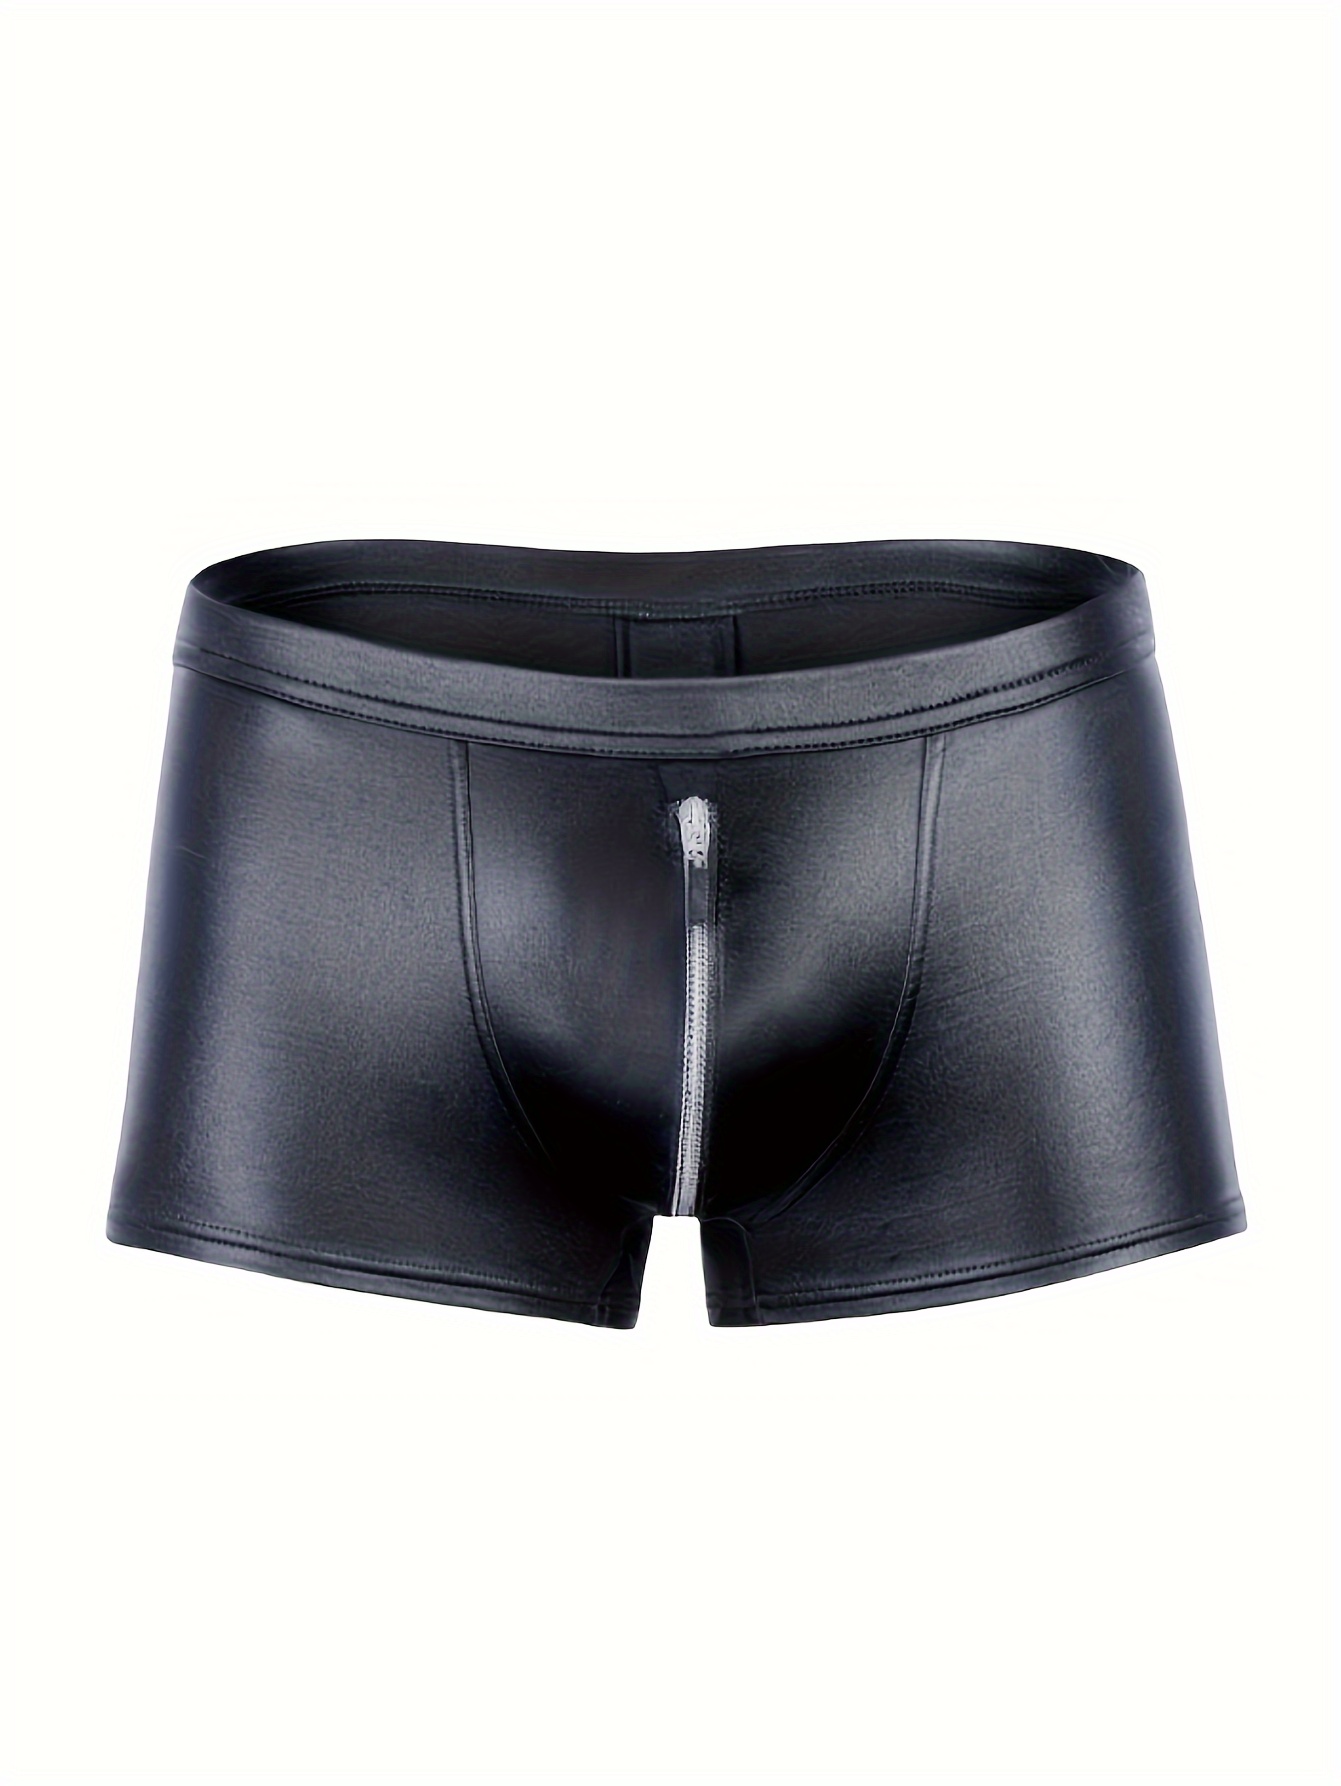 Men's Black Leather Underwear Tight Boxer